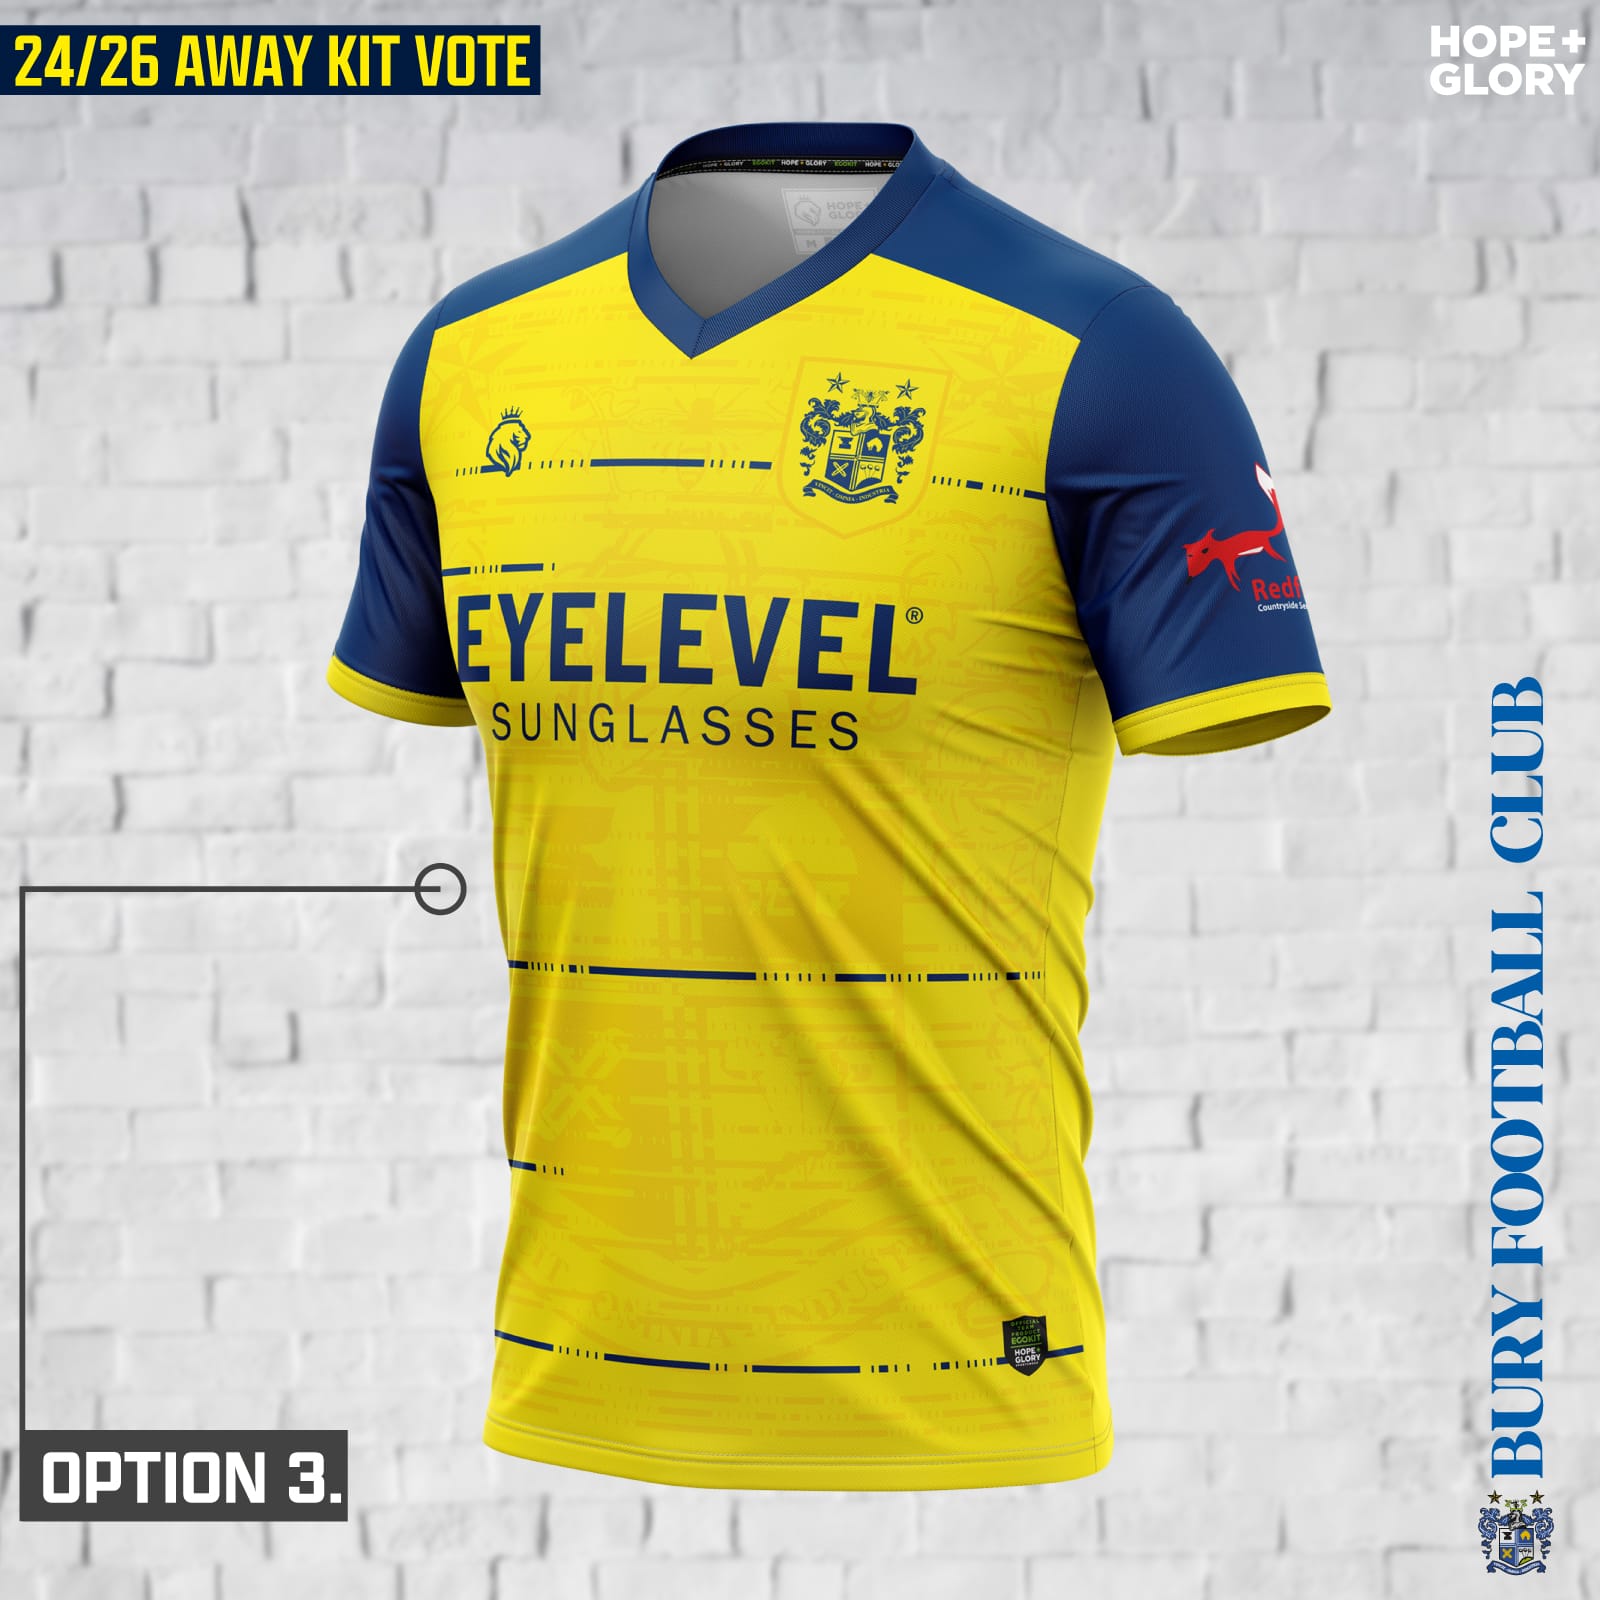 Away Shirt Design Vote